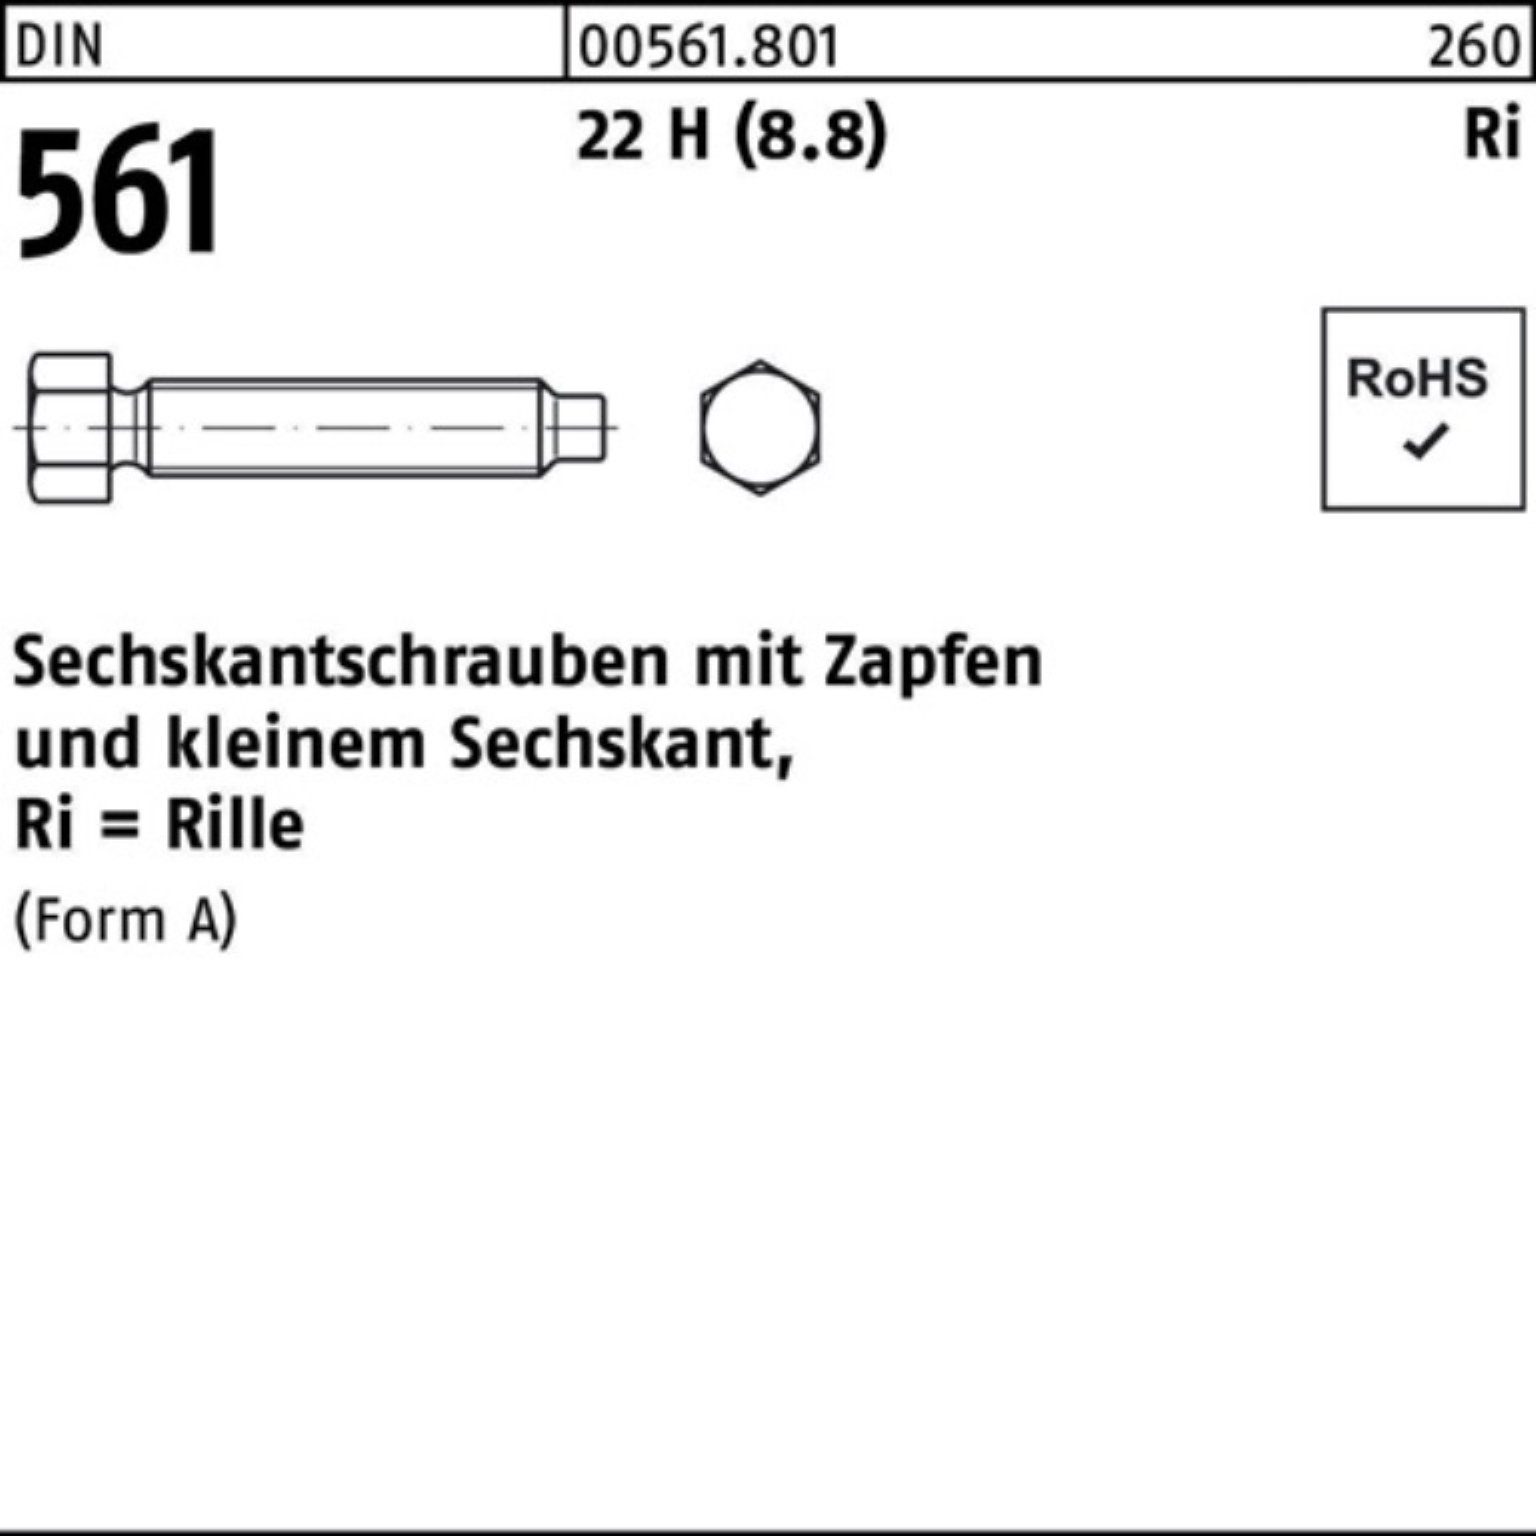 1 561 Sechskantschraube 90 AM 30x Reyher St DIN 100er Zapfen Sechskantschraube (8.8) H Pack 22